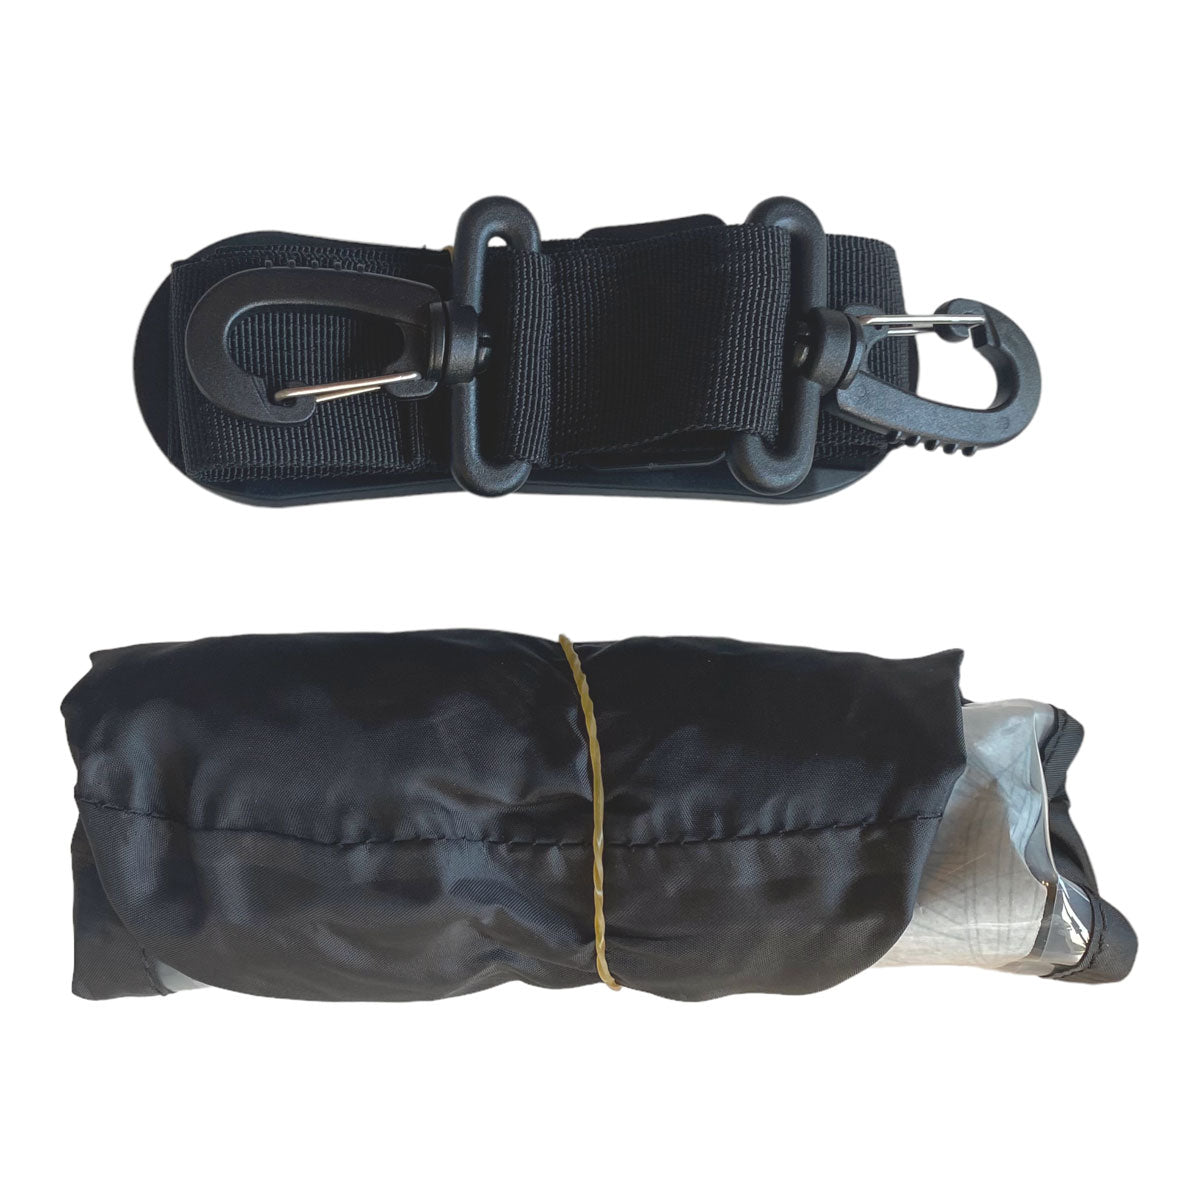 Bagster Baglocker Adventur Lock Tank Bag: Quick-release tank bag with 20-25 litres capacity - accessories